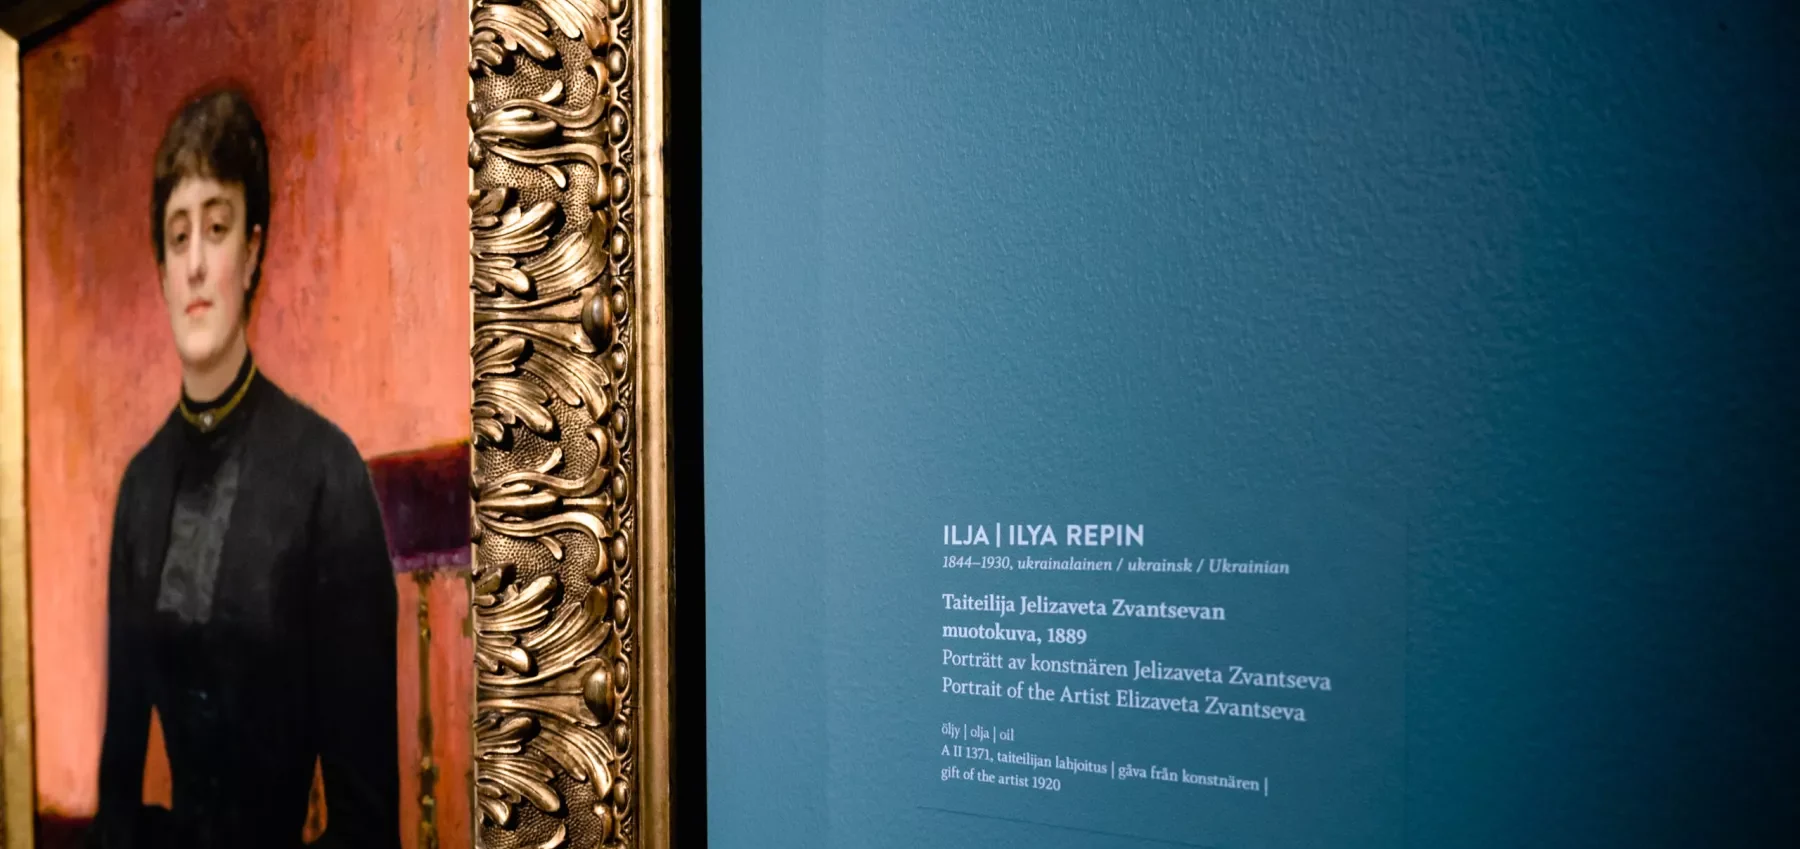 Finland’s largest museum recognizes Repin as Ukrainian